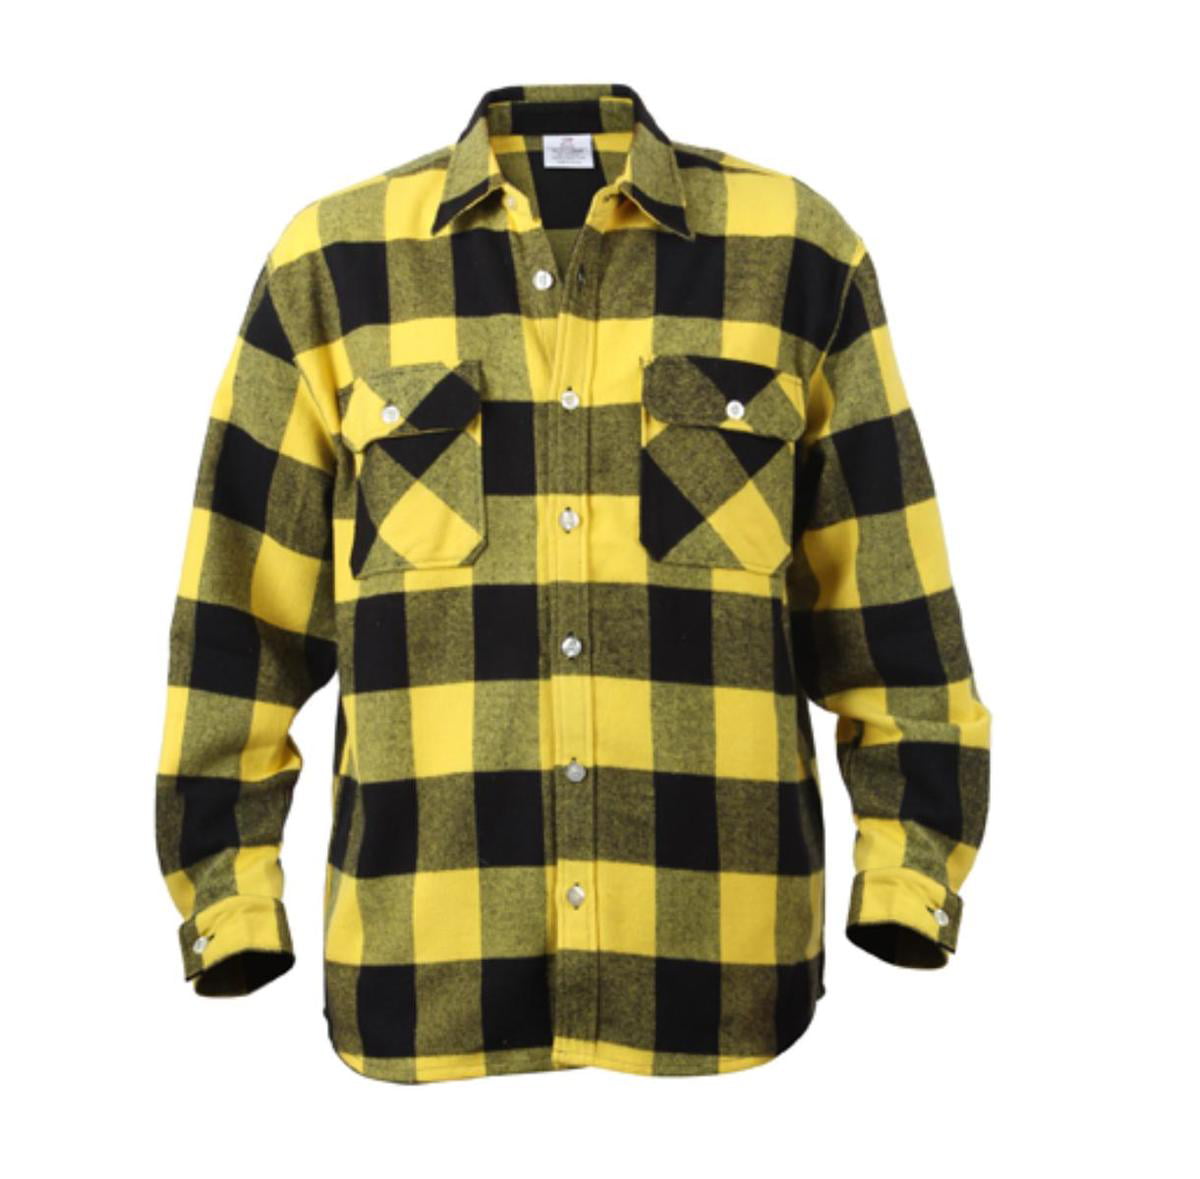 yellow and black checkerboard shirt